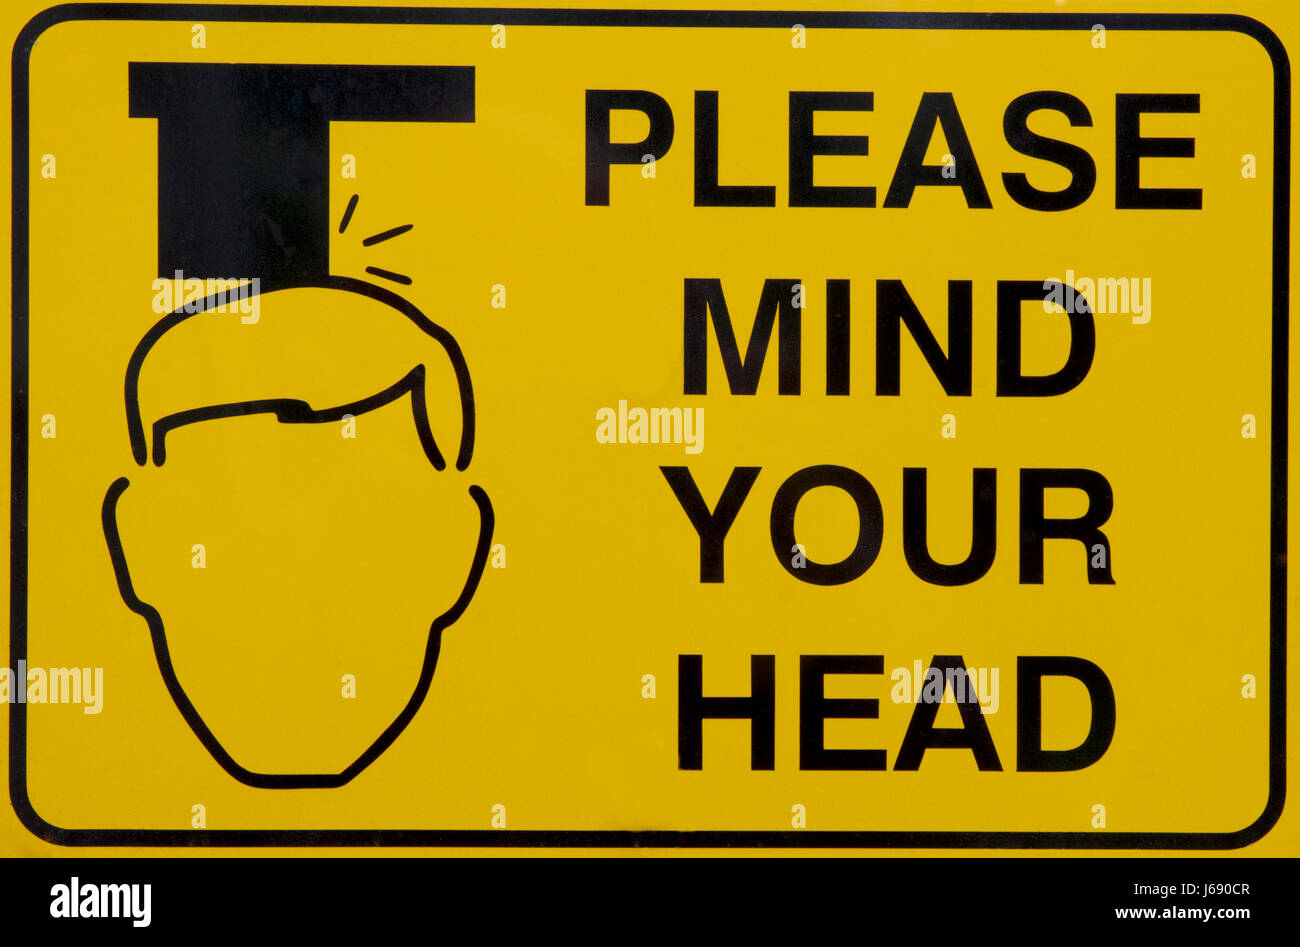 please-mind-your-head-signage-J690CR.jpg